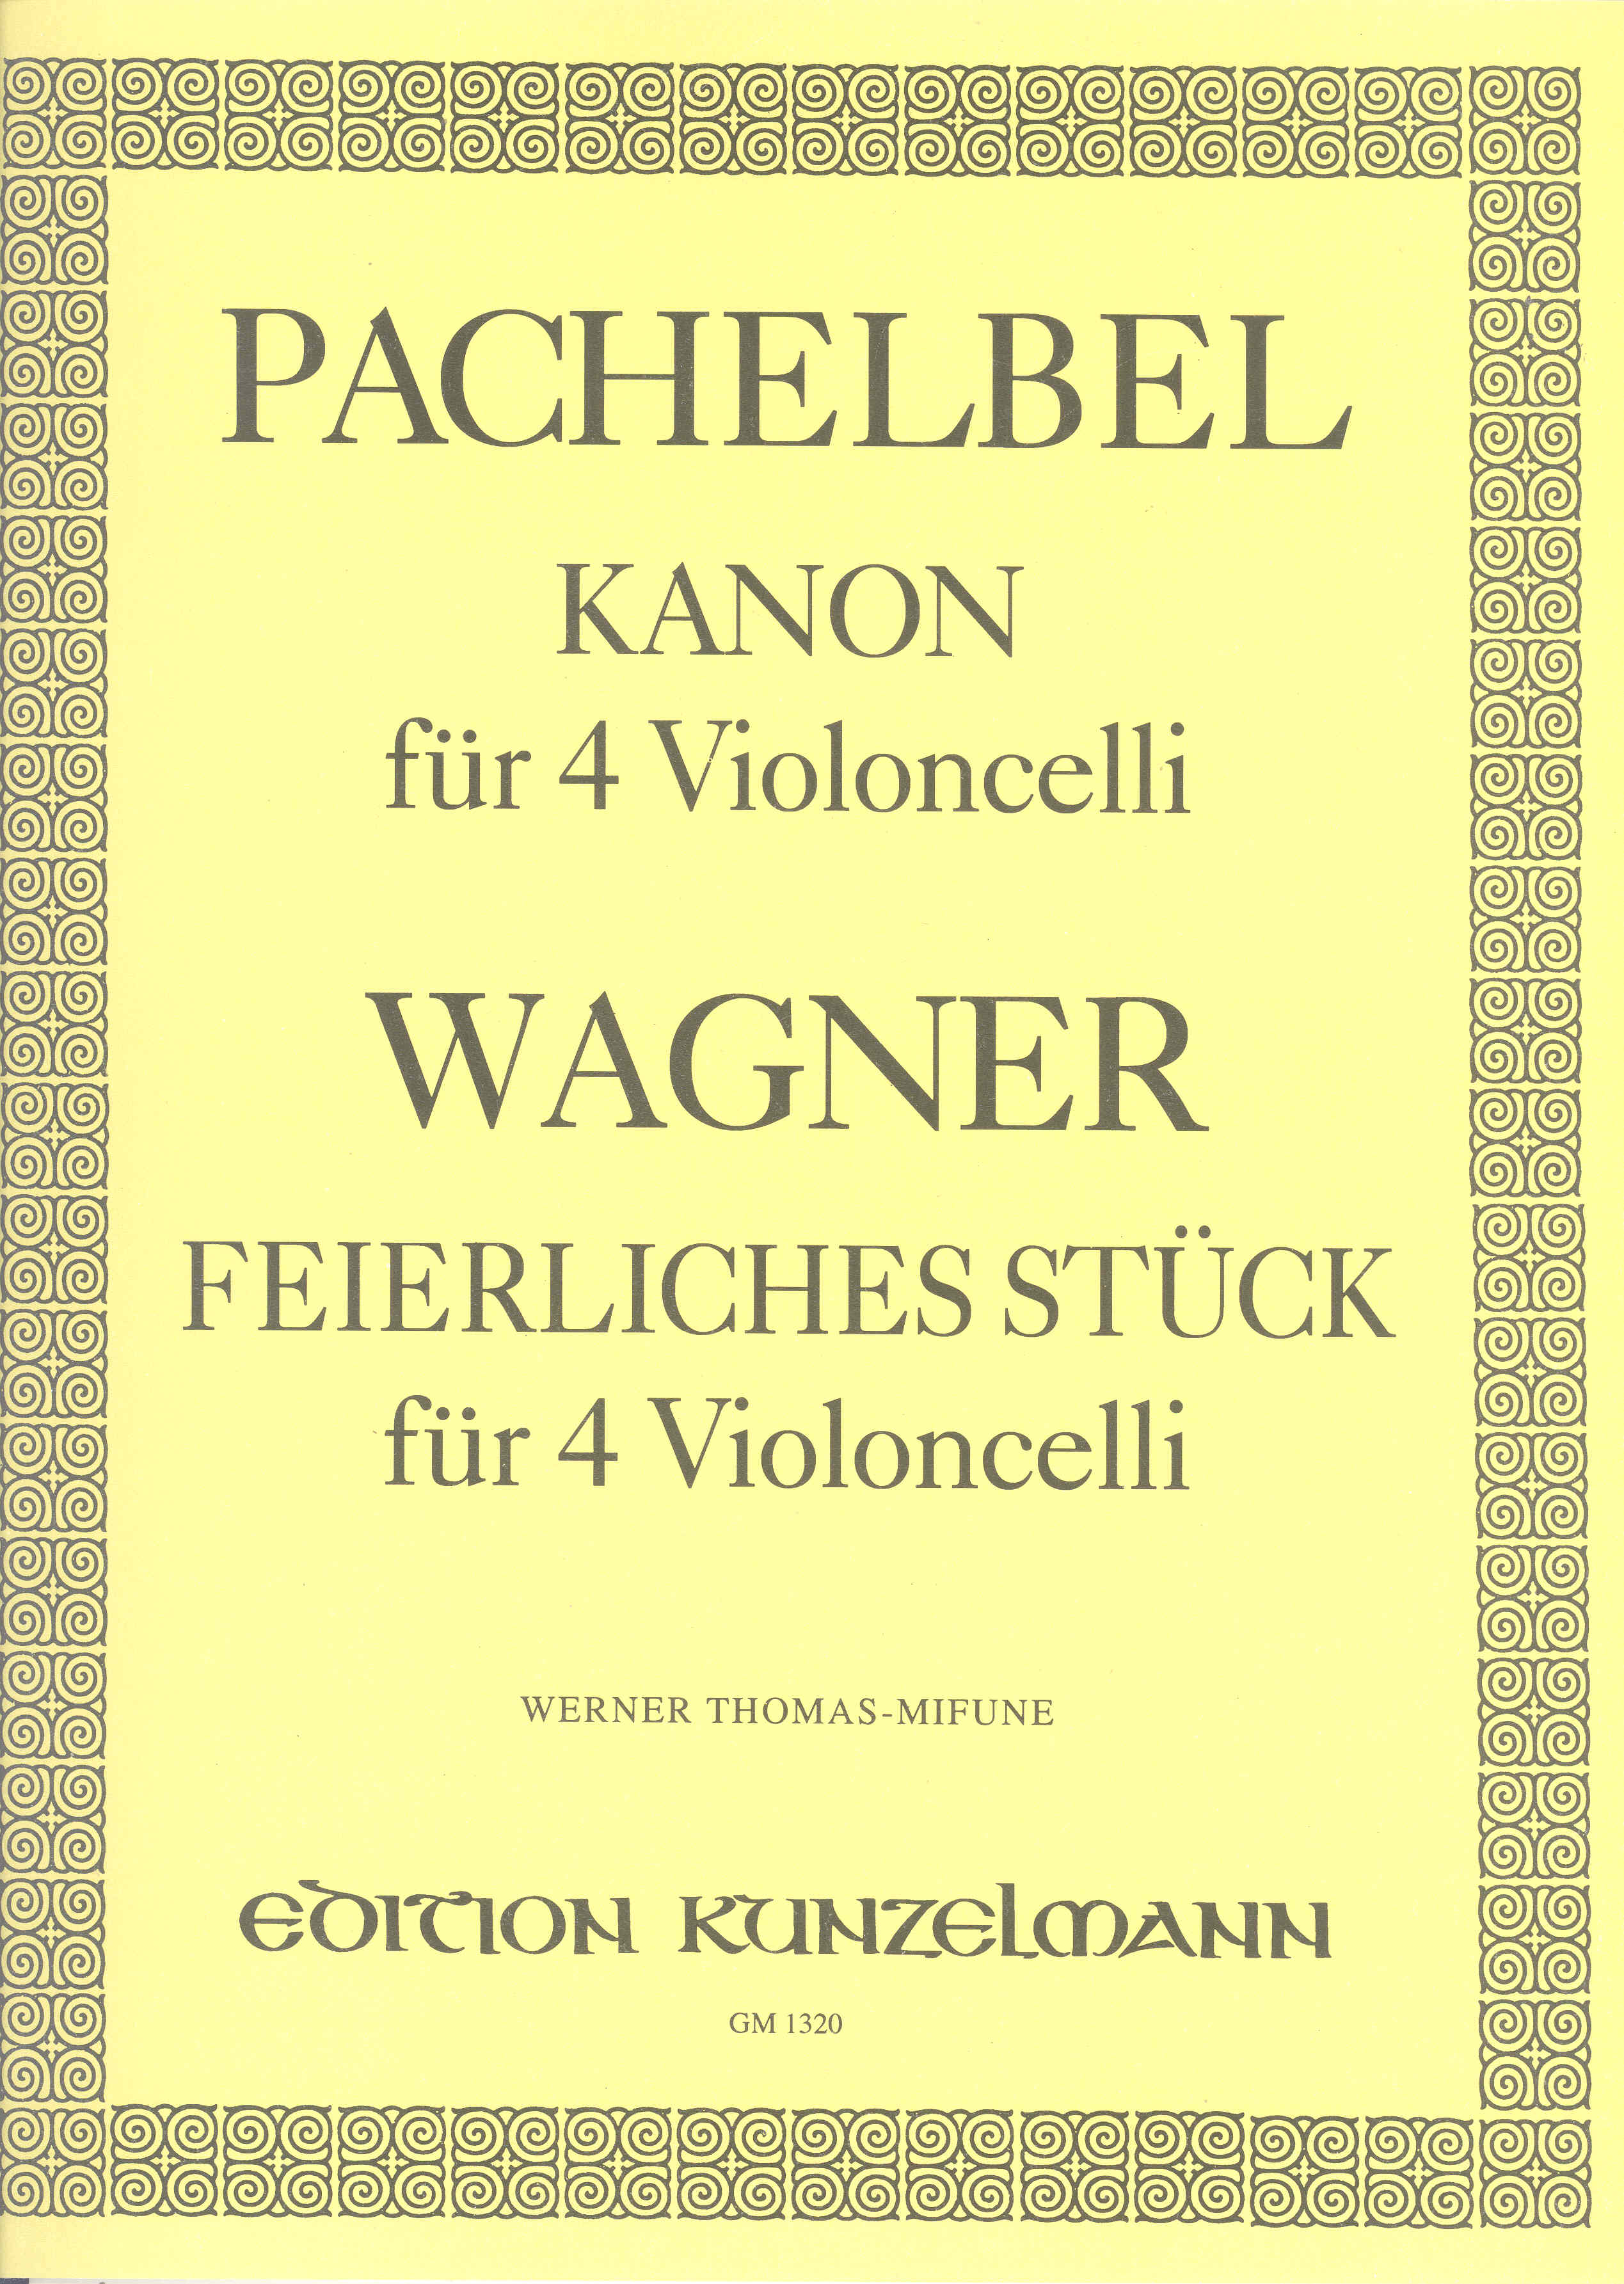 Pachelbel Canon 4 Cello Parts Sheet Music Songbook